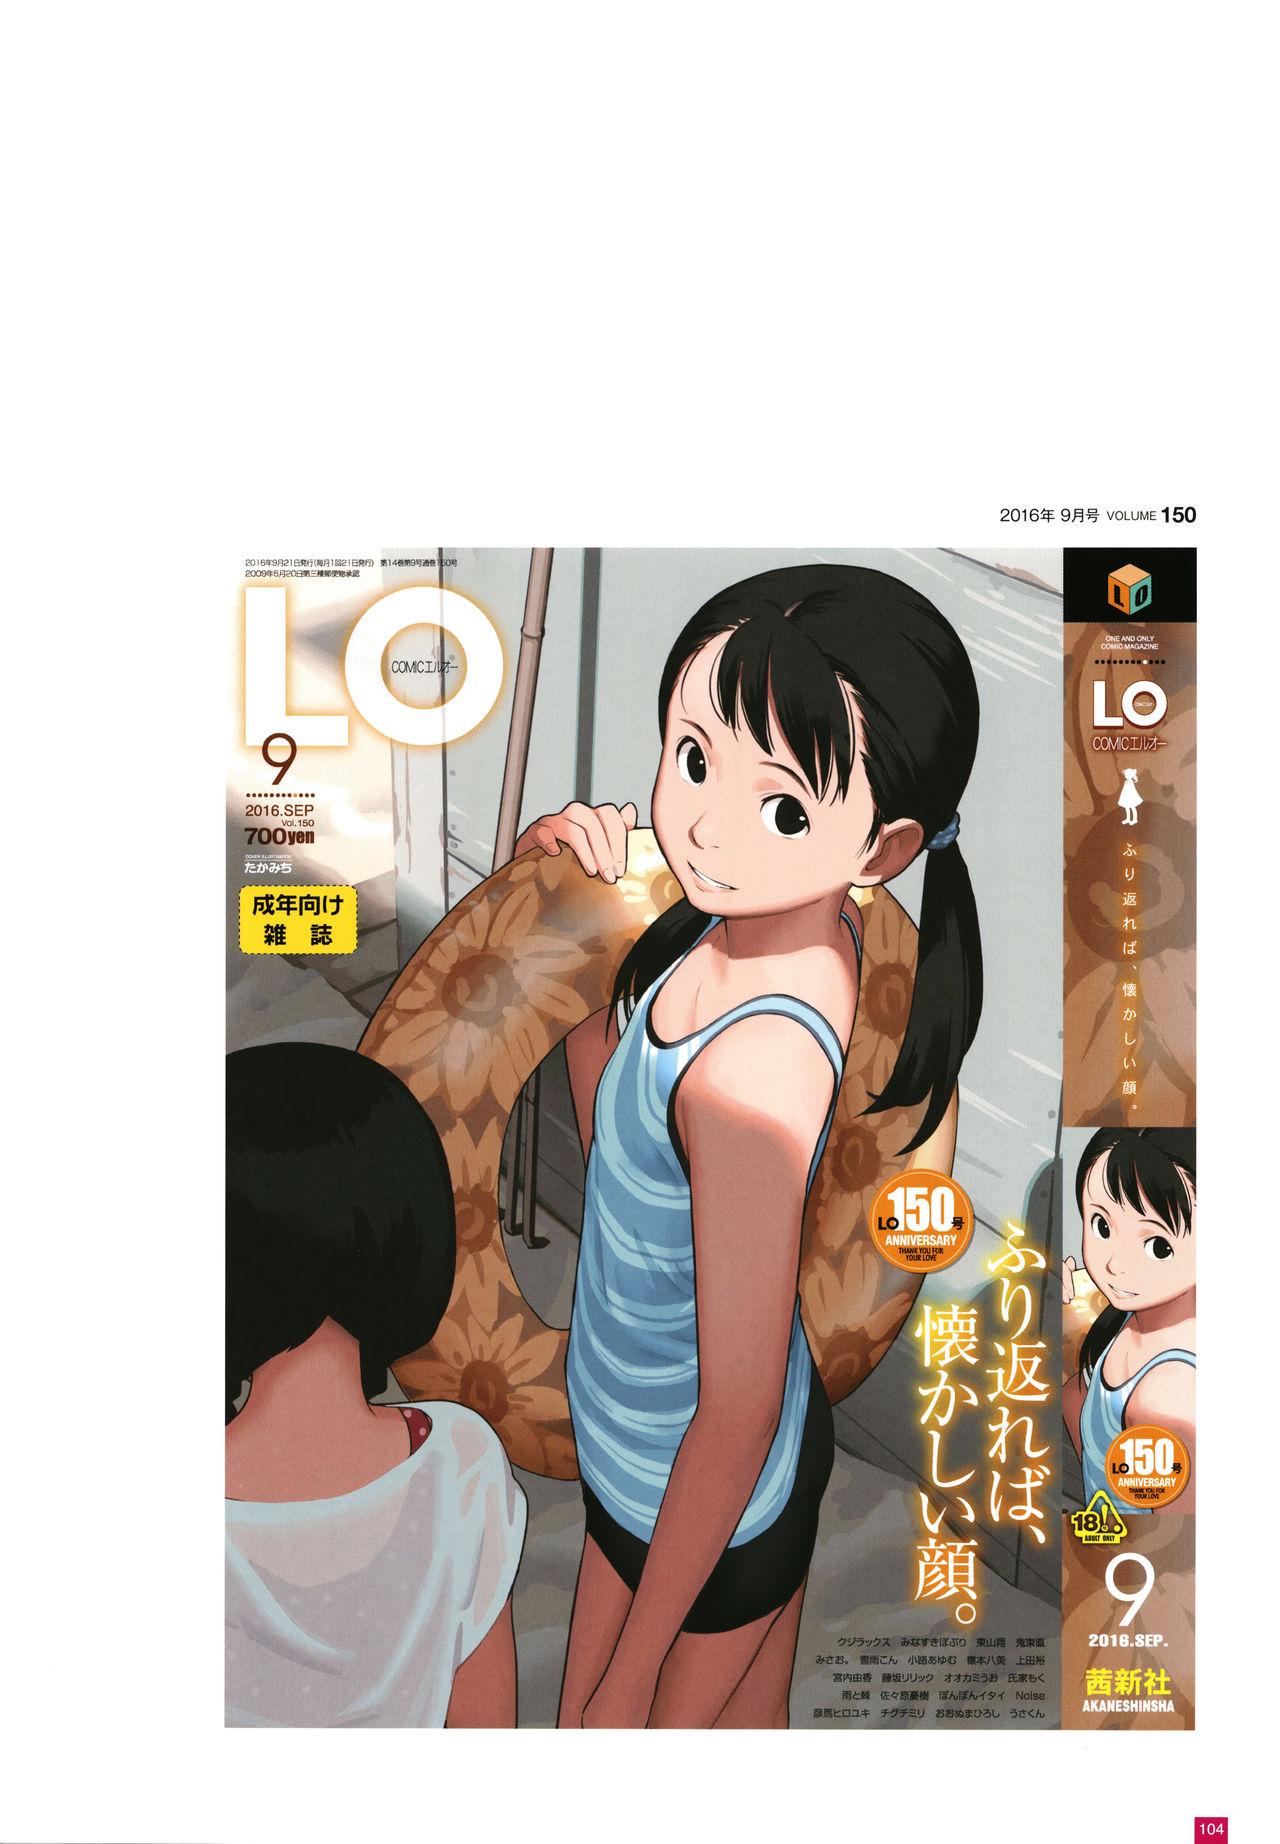 [Takamichi] LO Artbook 2-B TAKAMICHI LO-fi WORKS 106